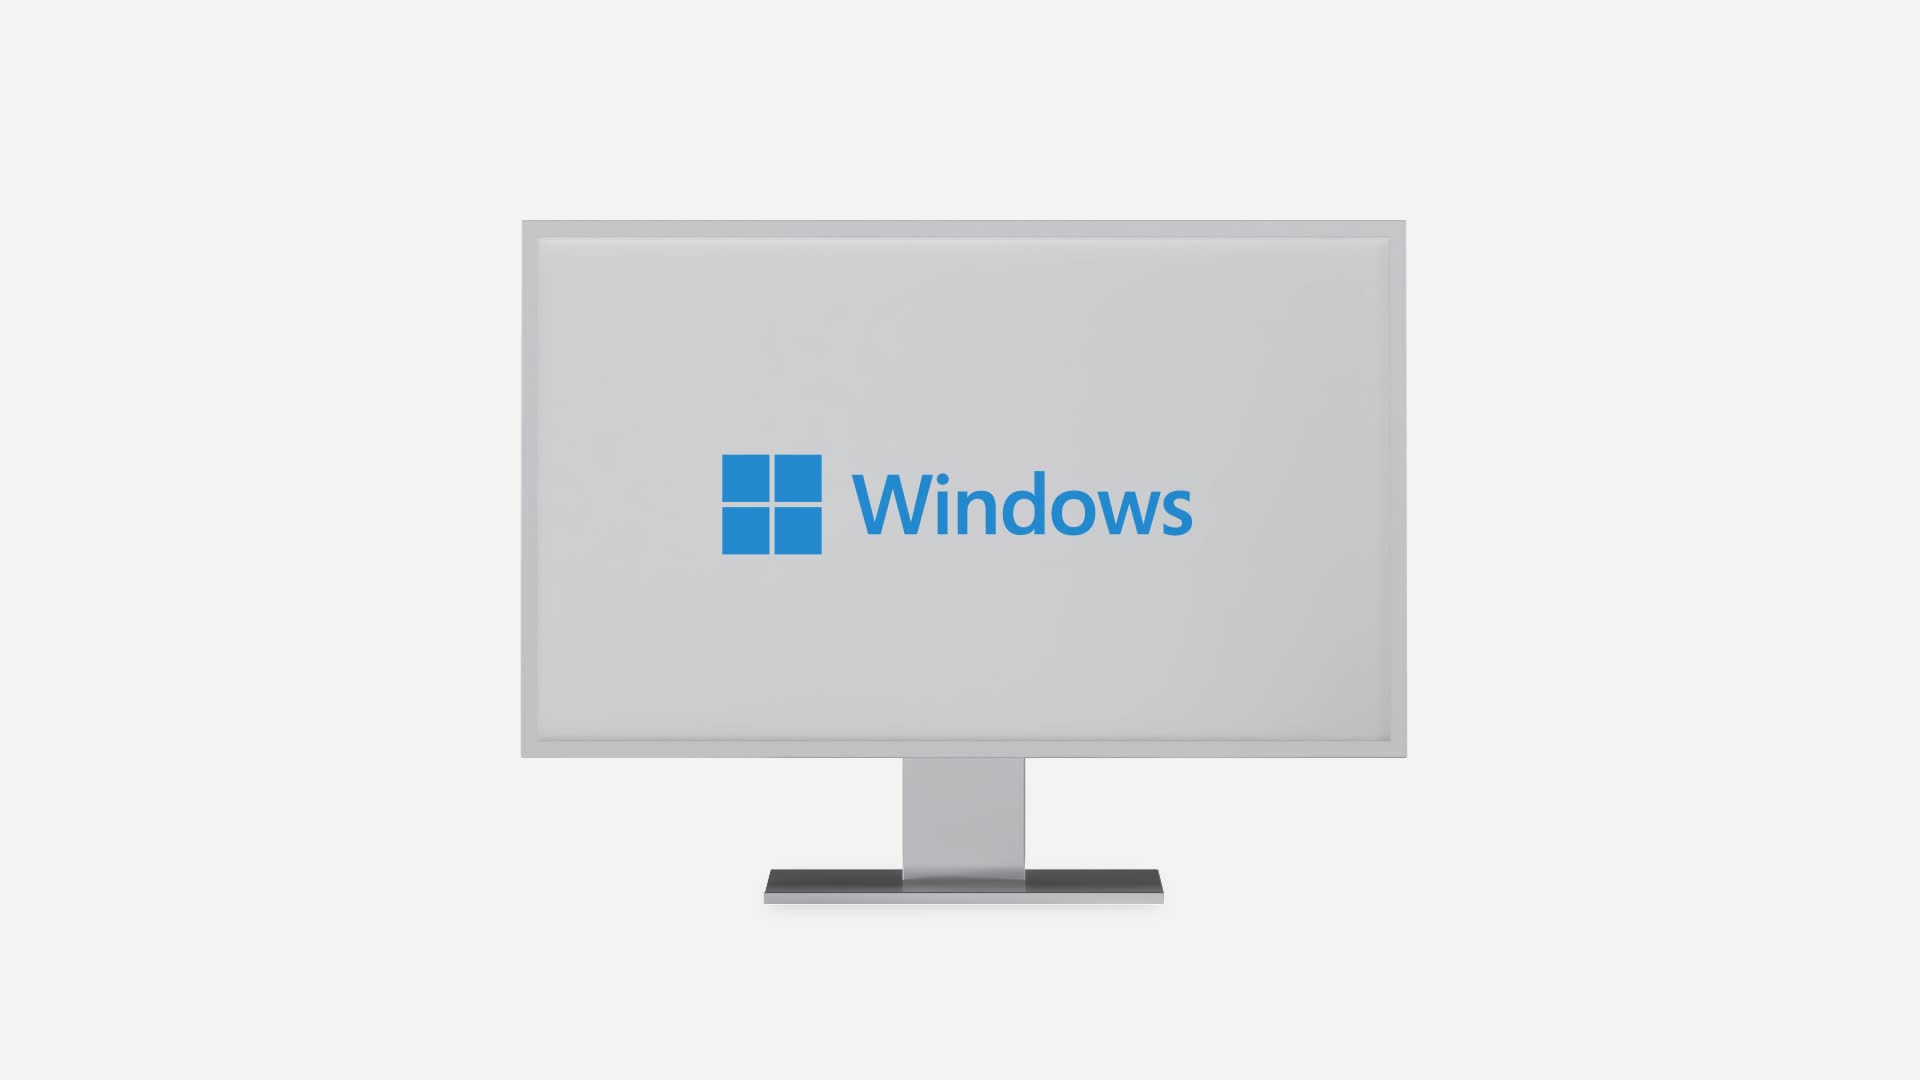 Product key for windows 10 Pro